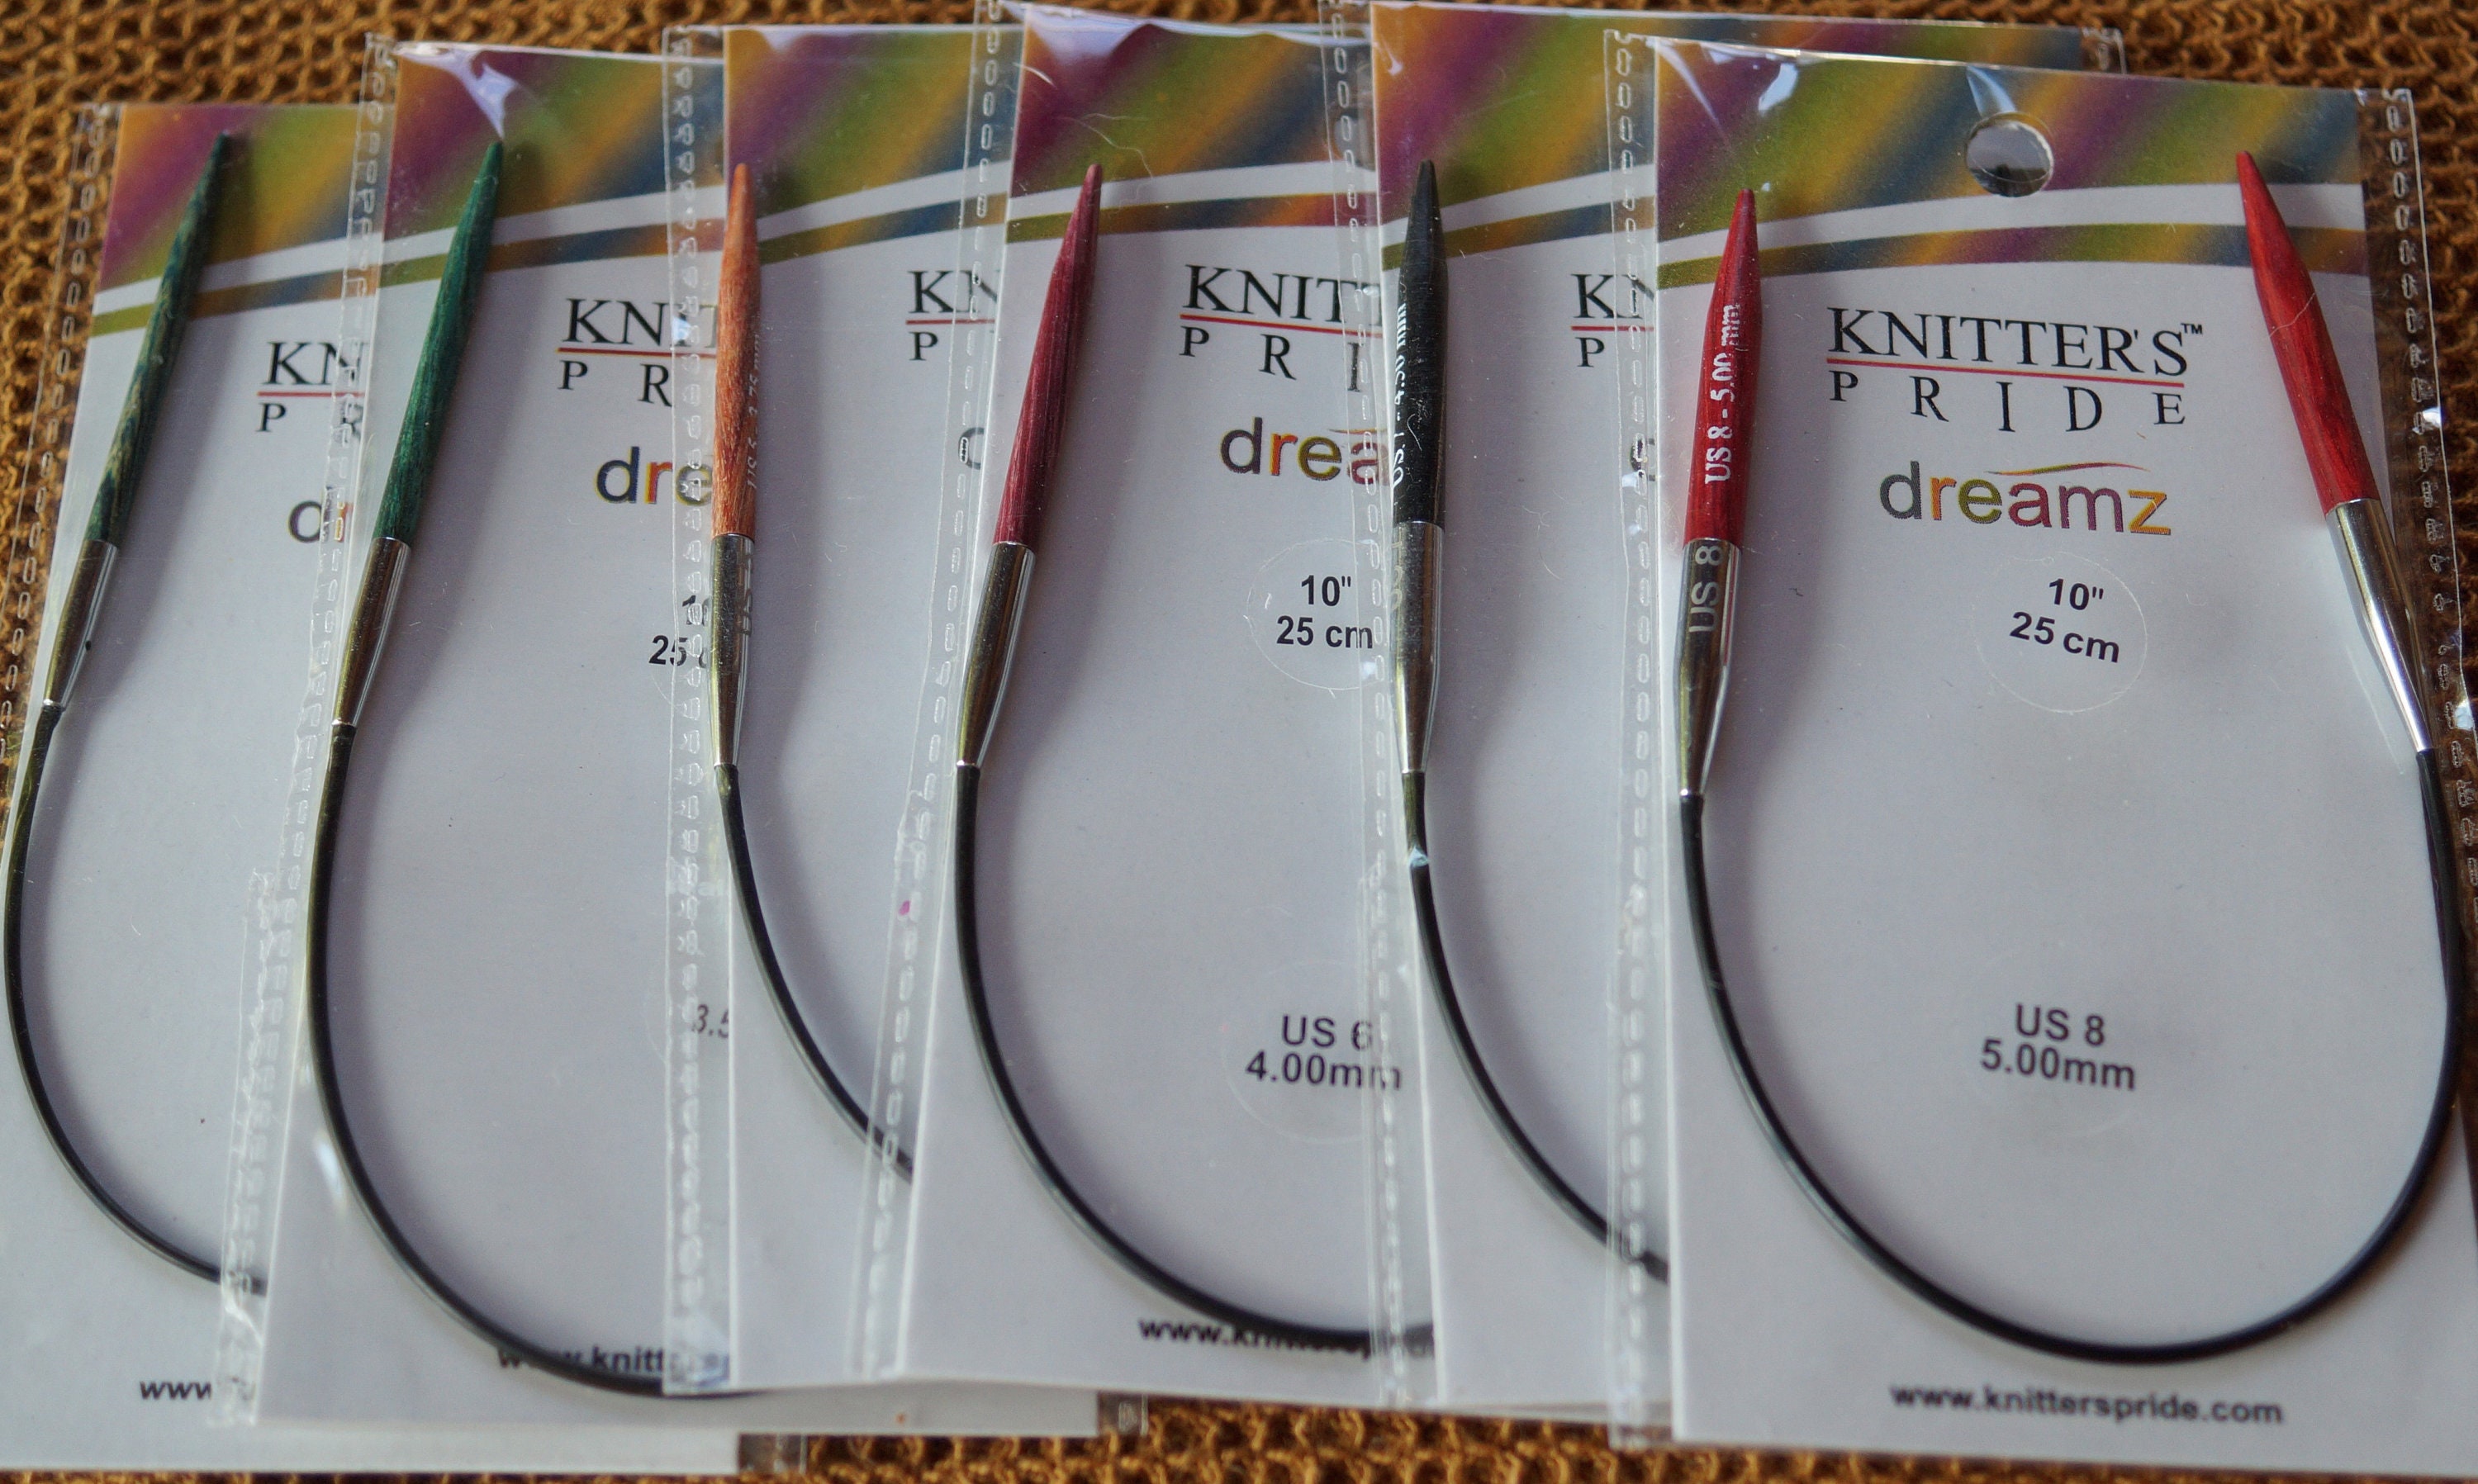 9-10 in. circular KP Dreamz knitting needles